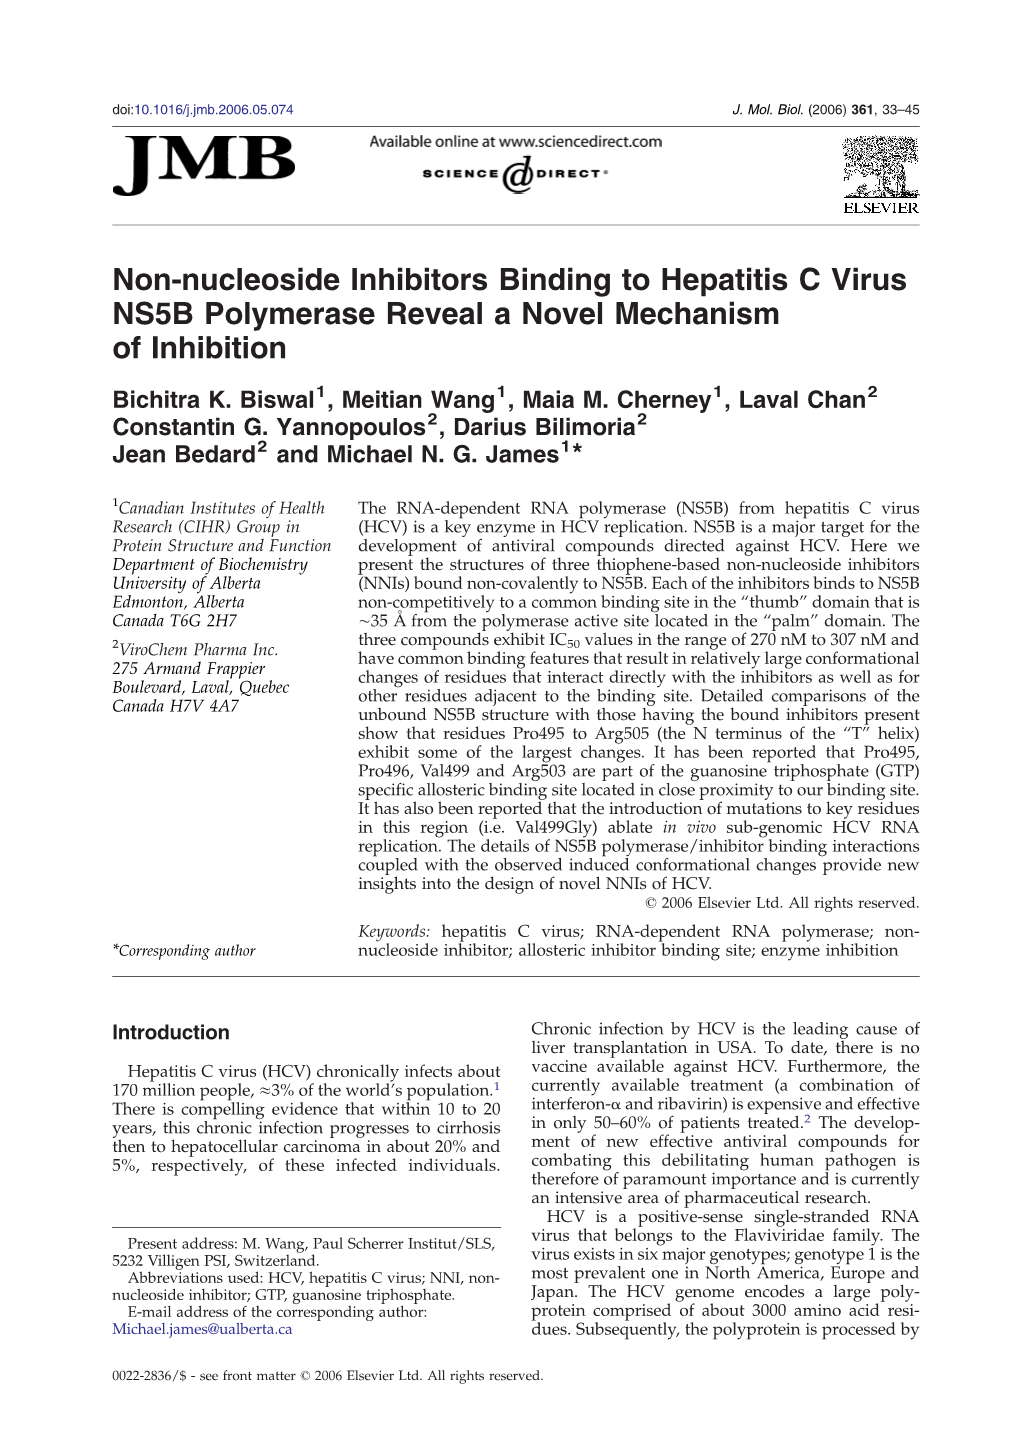 Non-Nucleoside Inhibitors Binding to Hepatitis C Virus NS5B Polymerase Reveal a Novel Mechanism of Inhibition